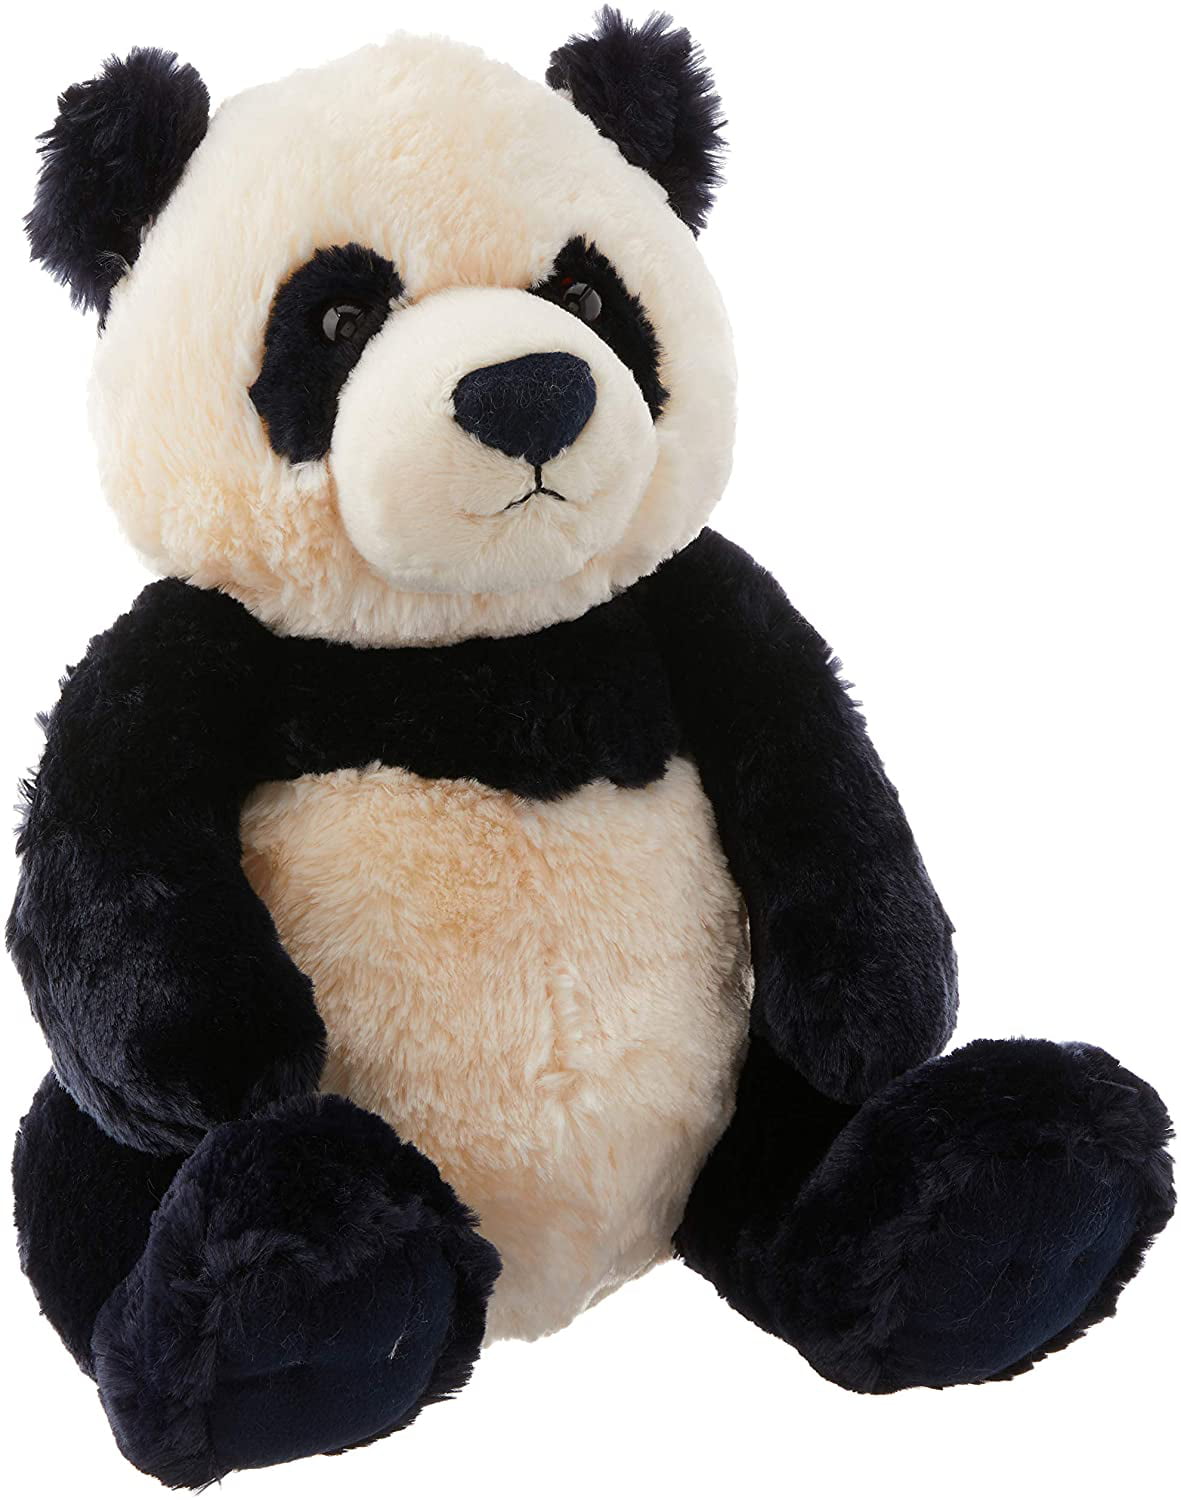 Cute PANDA BEAR Stuffed Animal Plush soft Toy Doll Home Car Decor Kids Gift